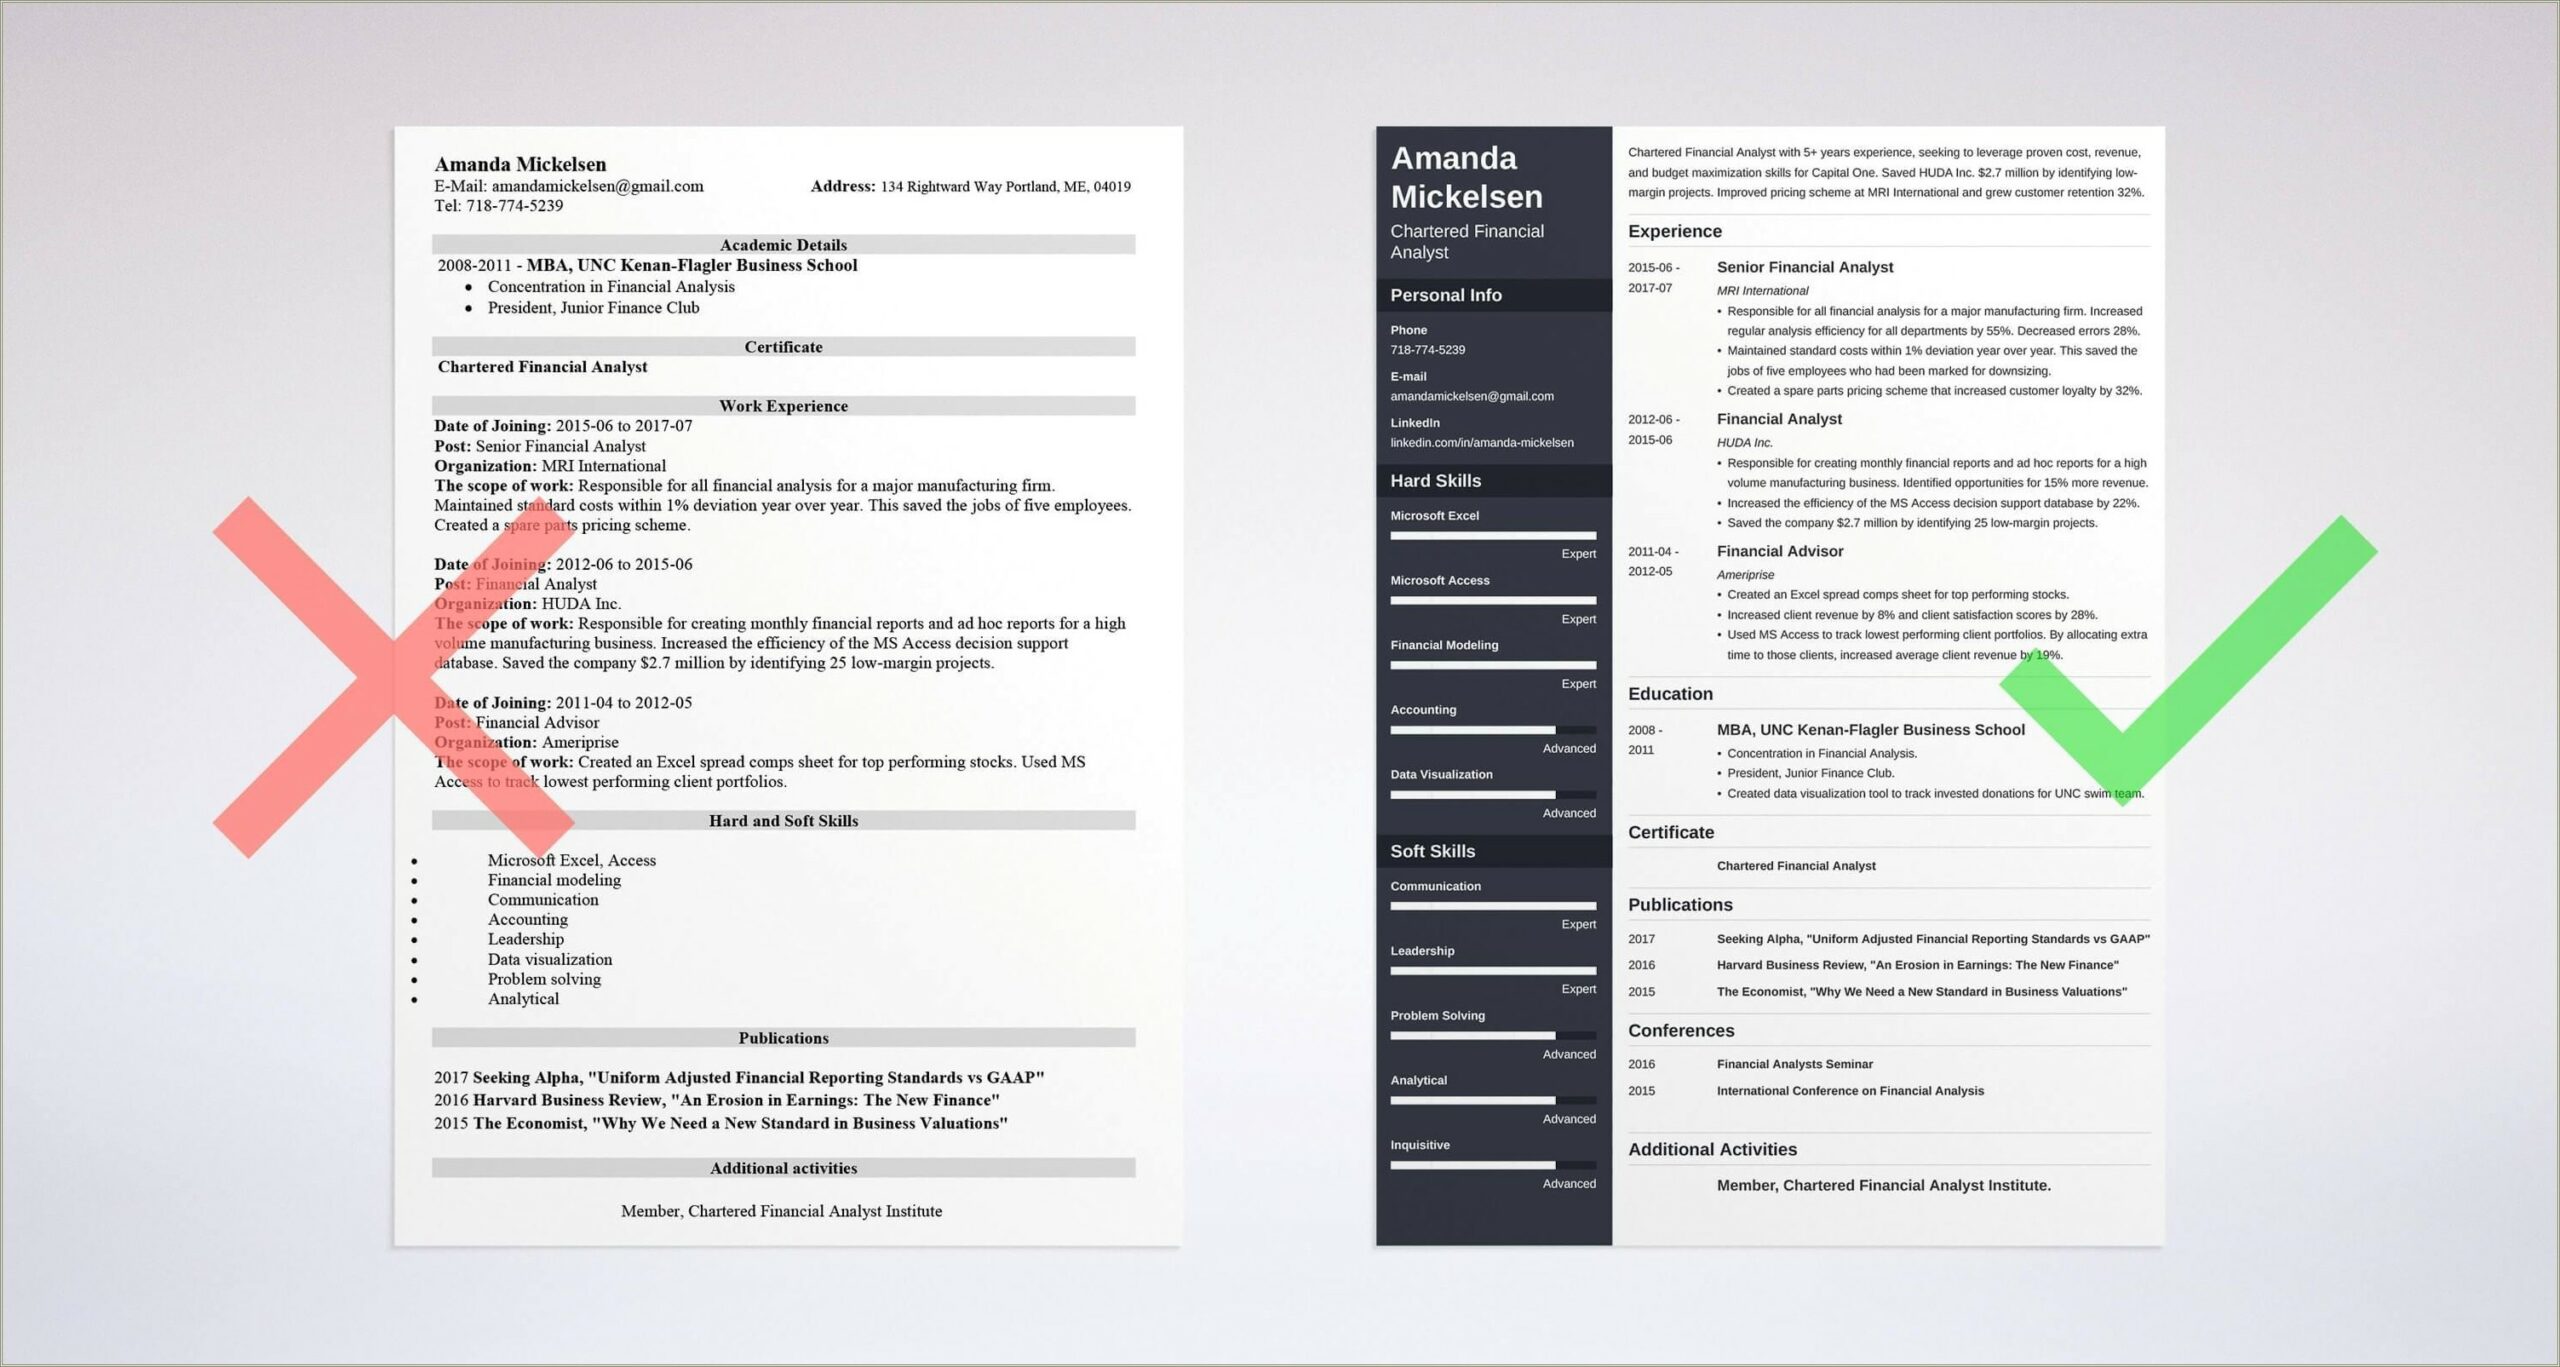 Harvard Business School Resume Format.doc